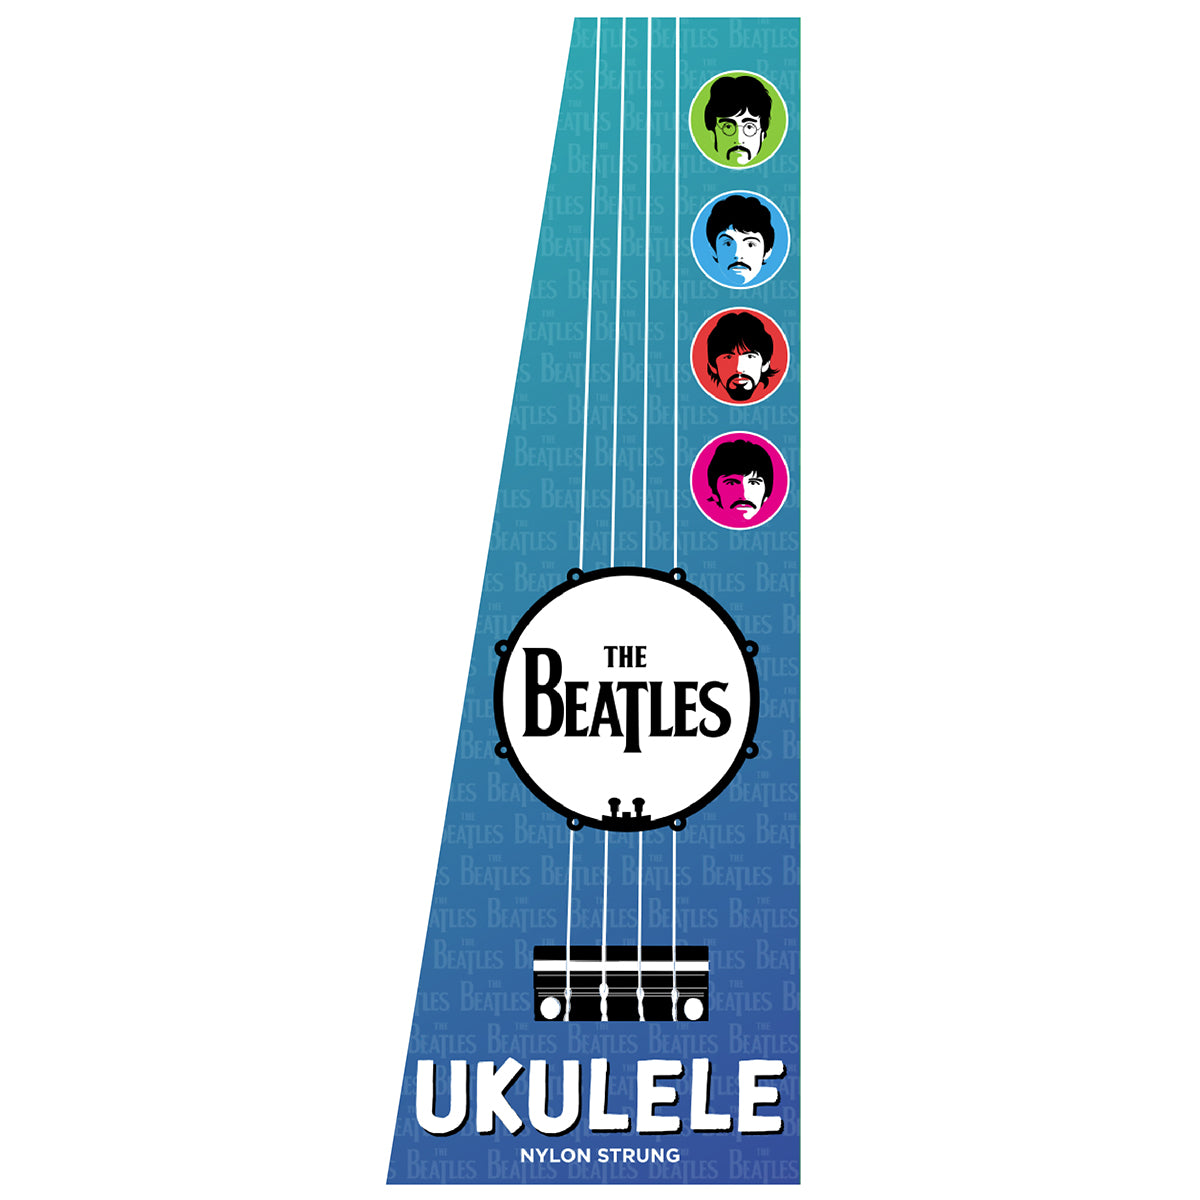 The Beatles Ukulele | Help